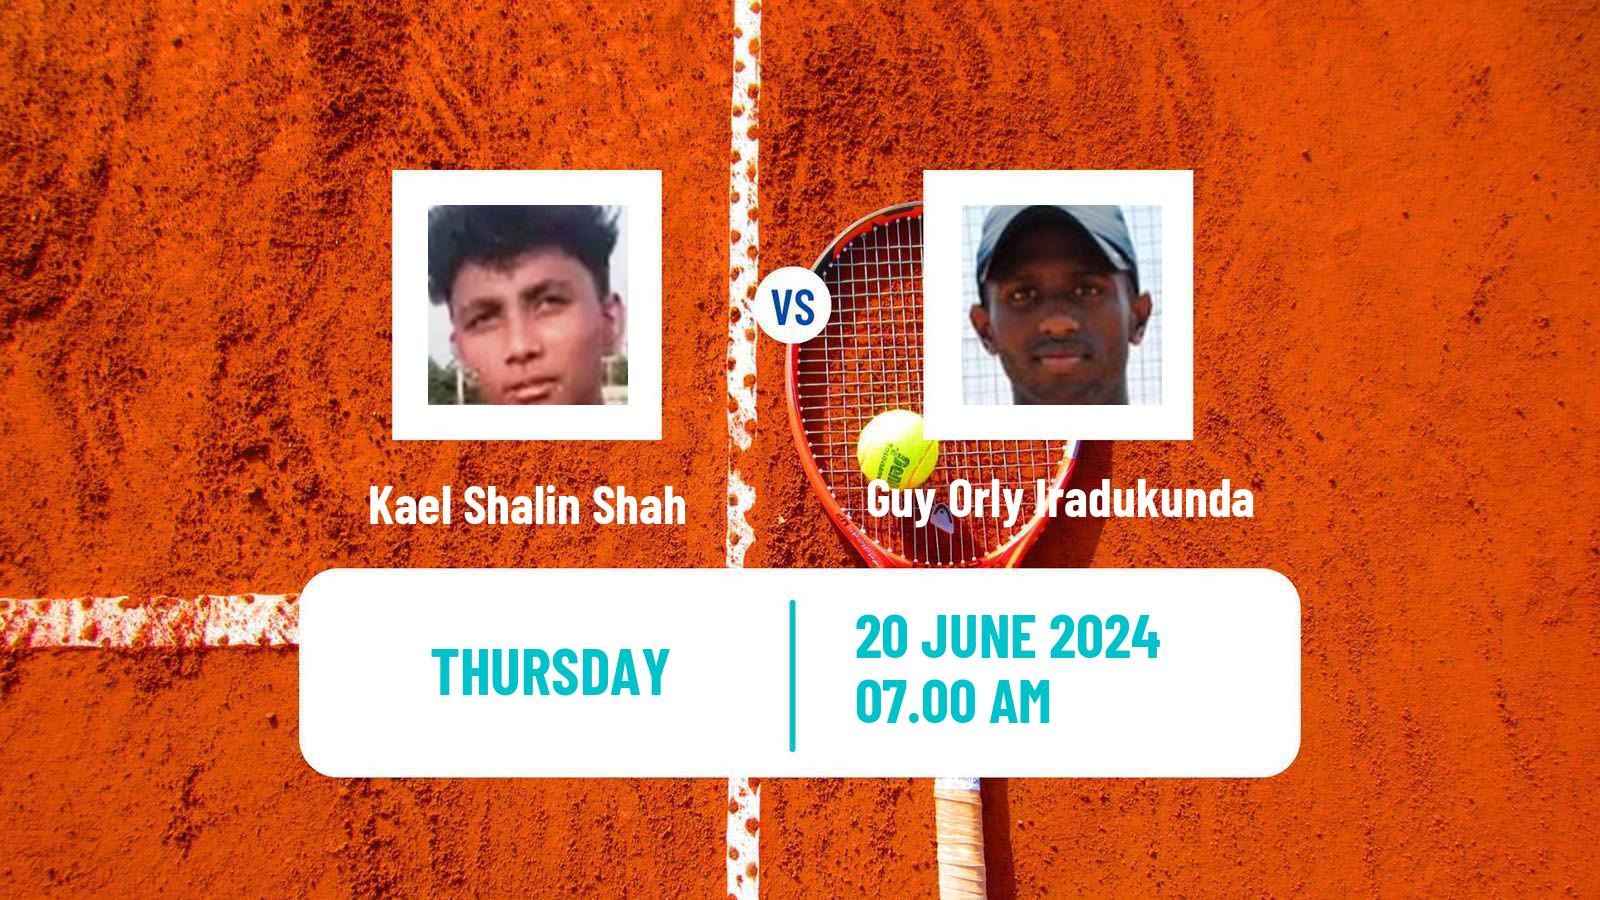 Tennis Davis Cup Group IV Kael Shalin Shah - Guy Orly Iradukunda